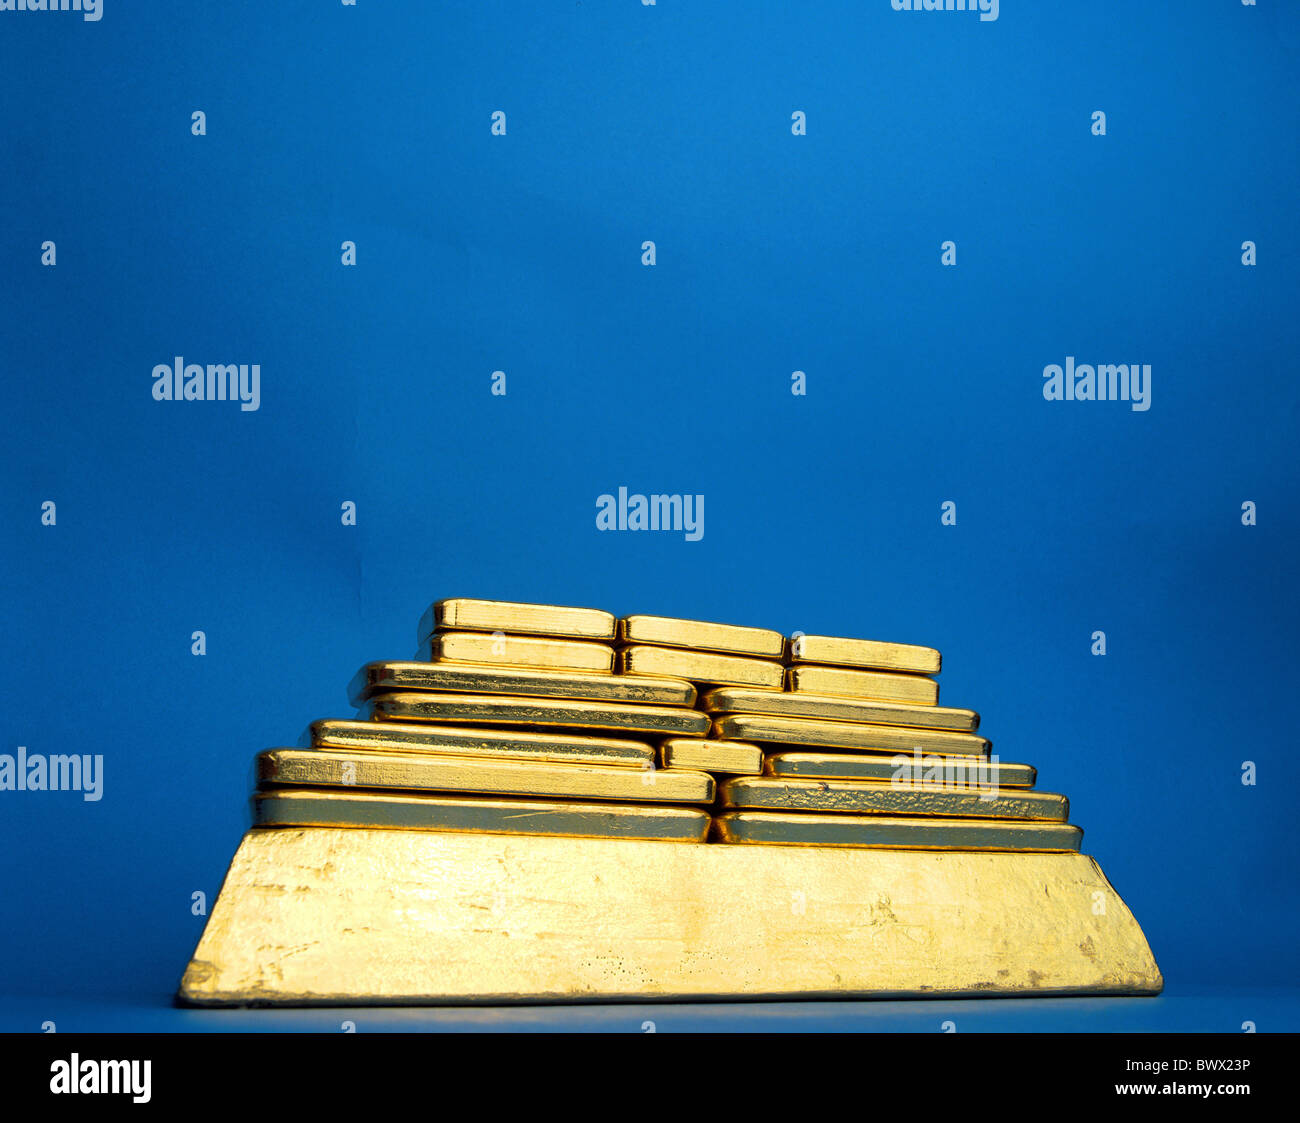 Accatastati in pile accatastate denaro banca oro sfondo blu gold bar piramide Foto Stock